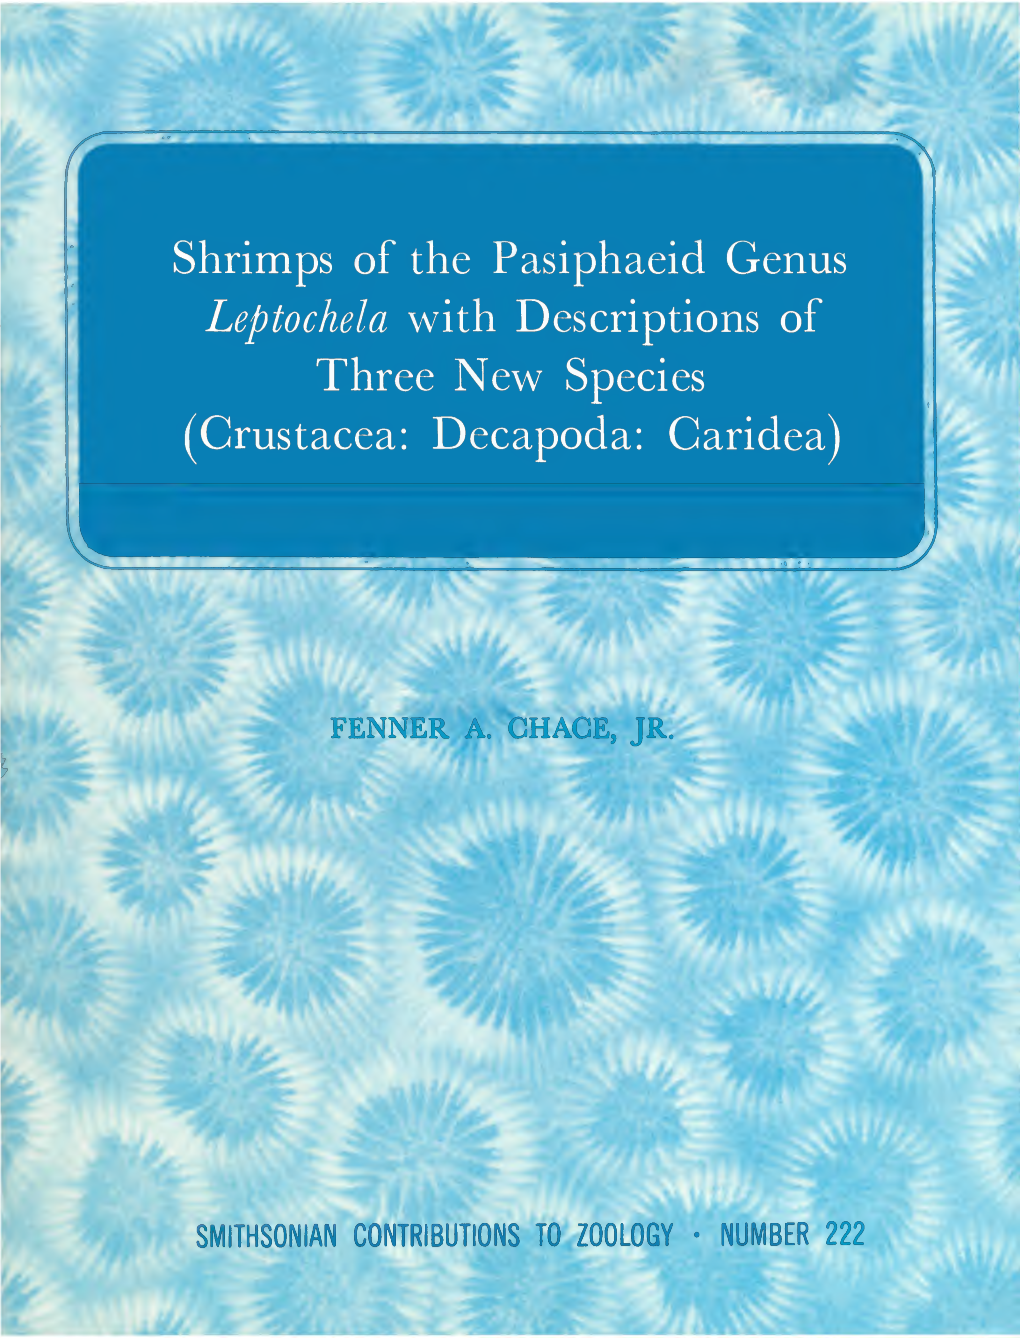 Shrimps of the Pasiphaeid Genus Leptochela with Descriptions of Three New Species (Crustacea: Decapoda: Caridea)